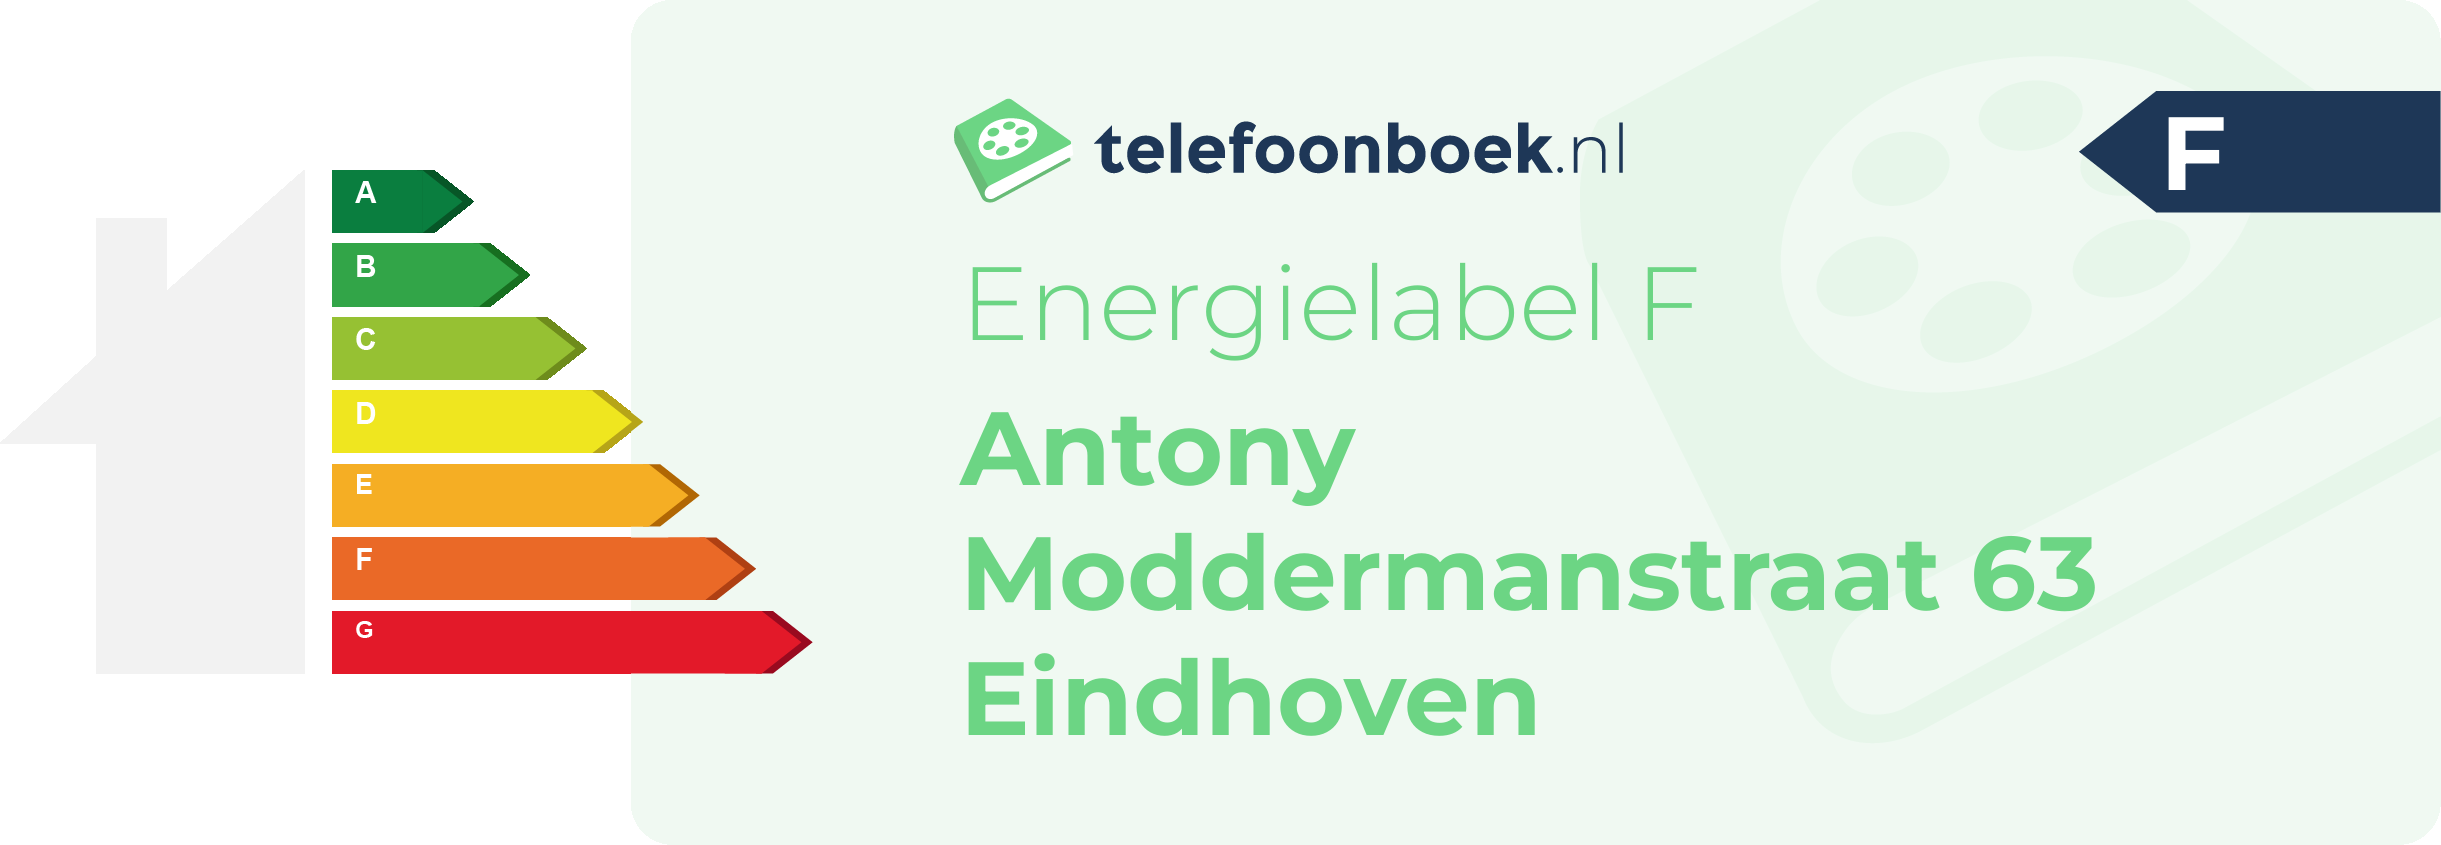 Energielabel Antony Moddermanstraat 63 Eindhoven